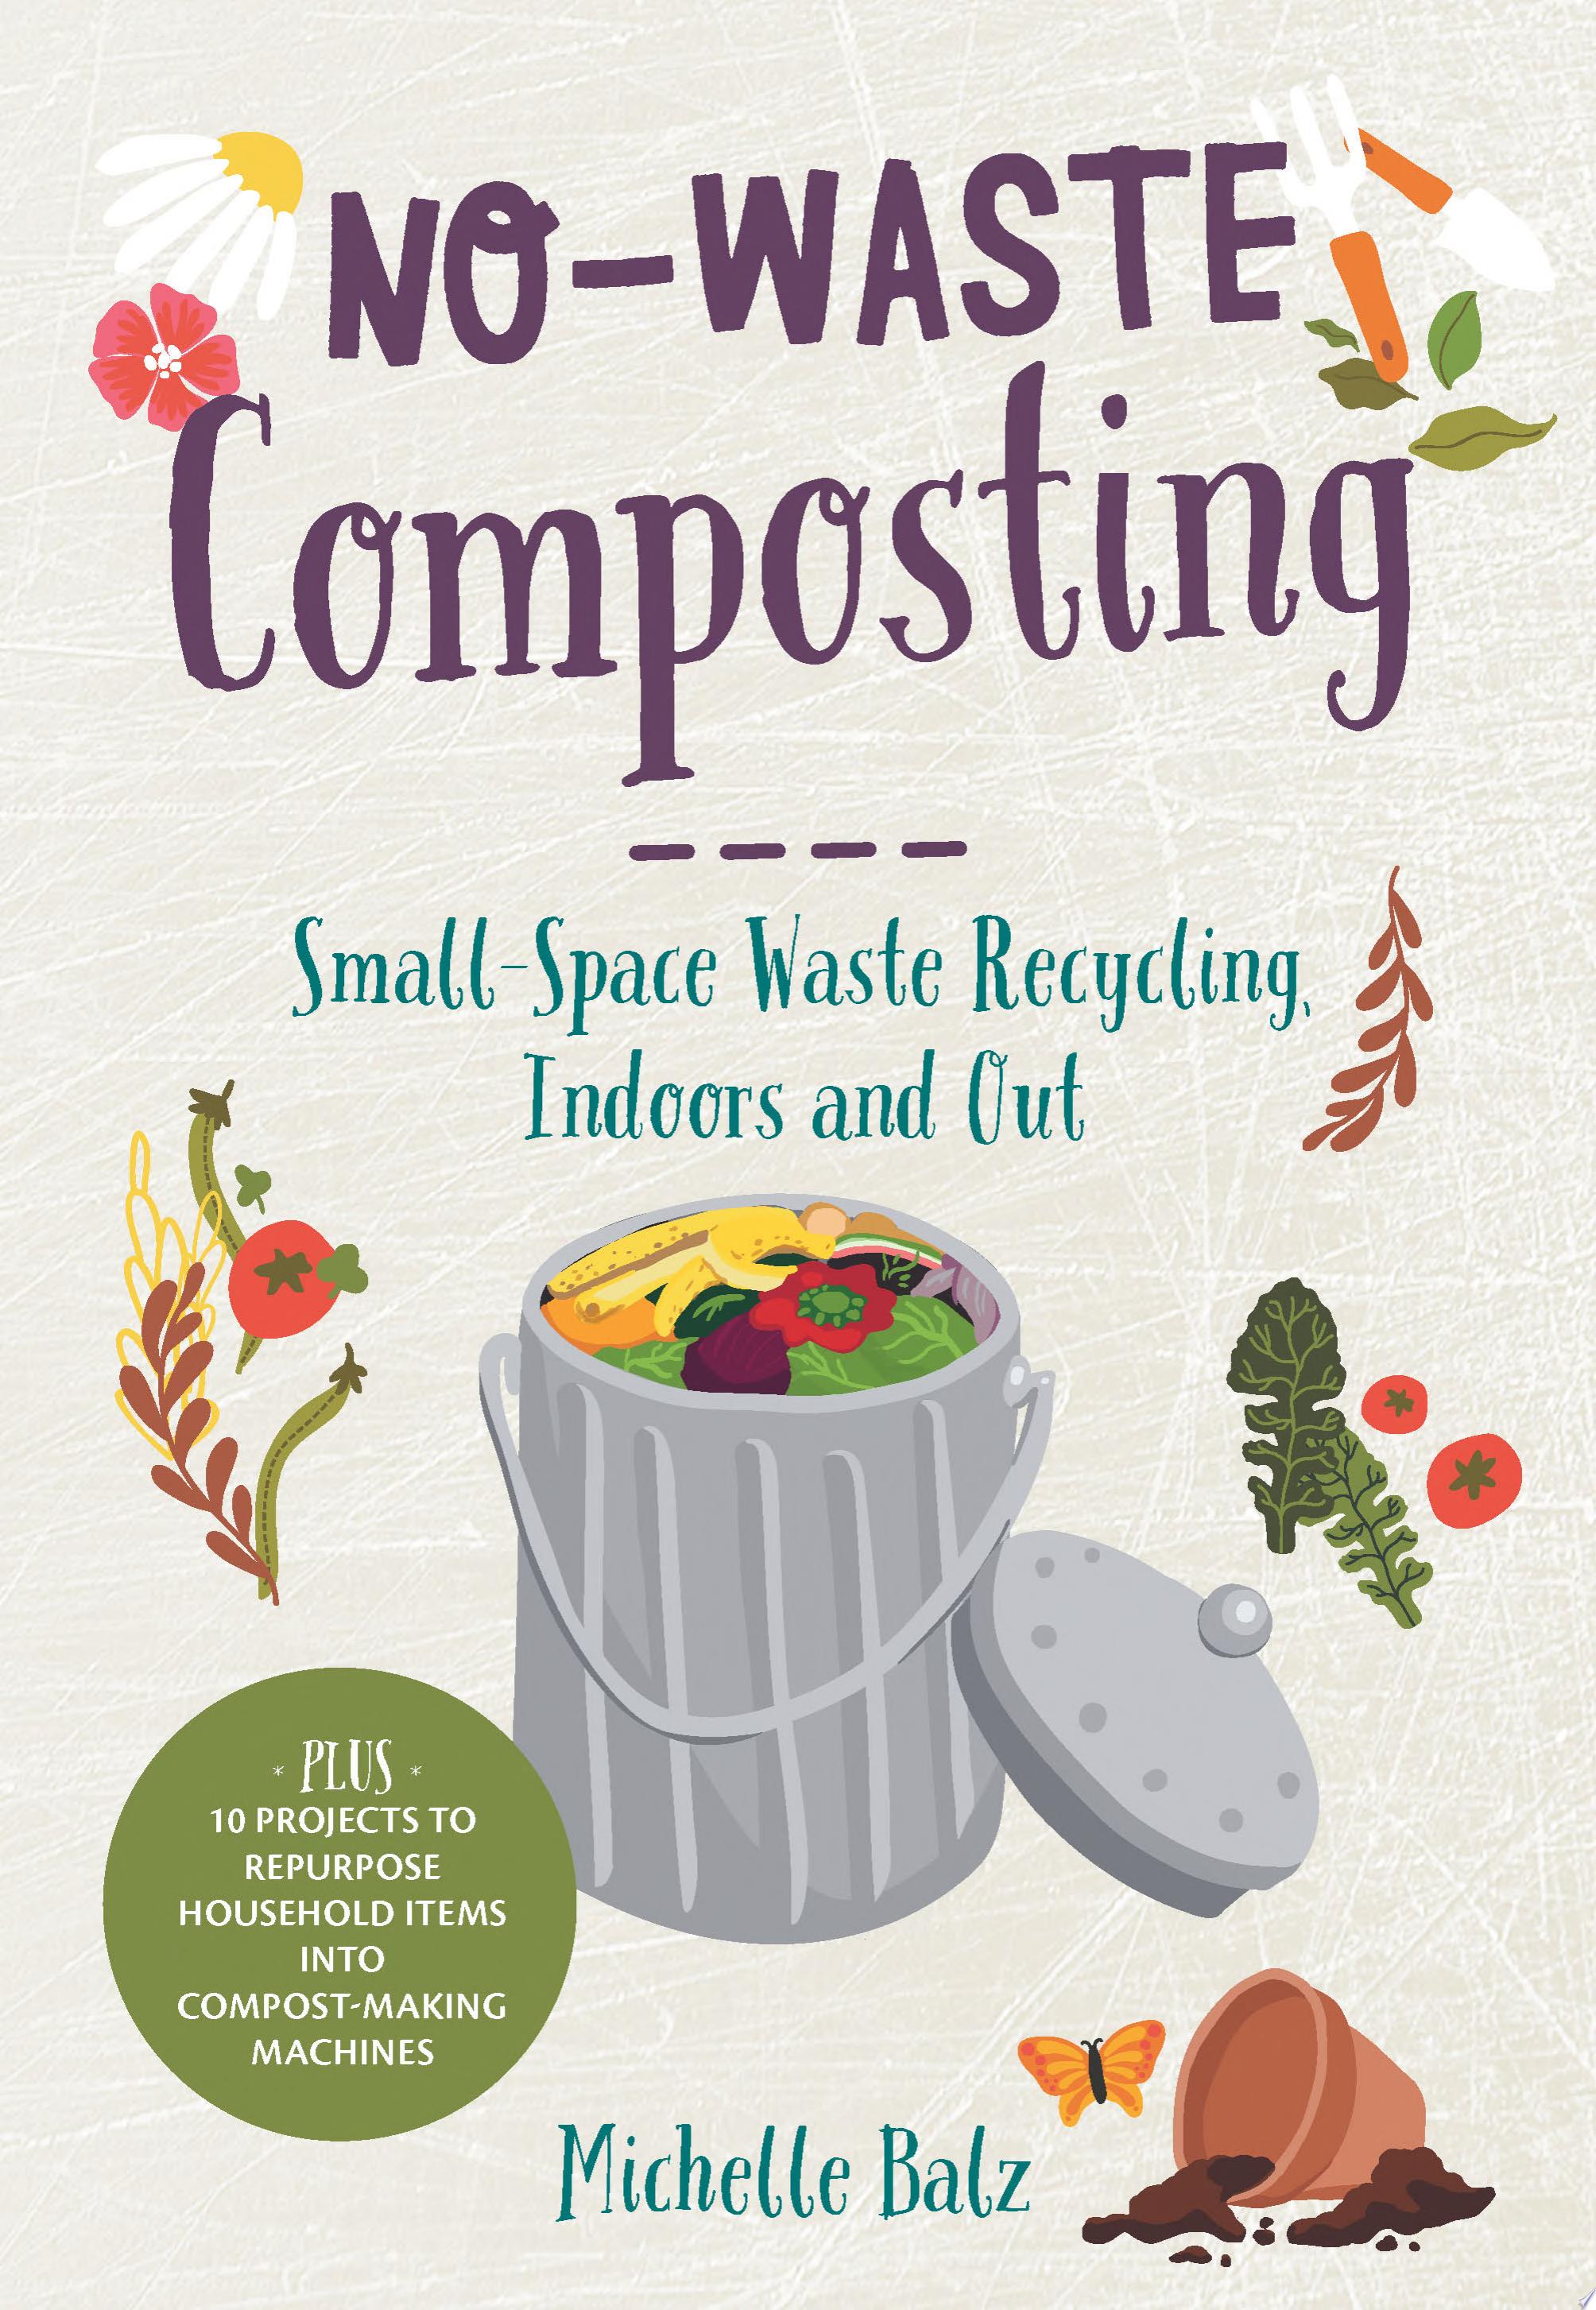 Image for "No-Waste Composting"